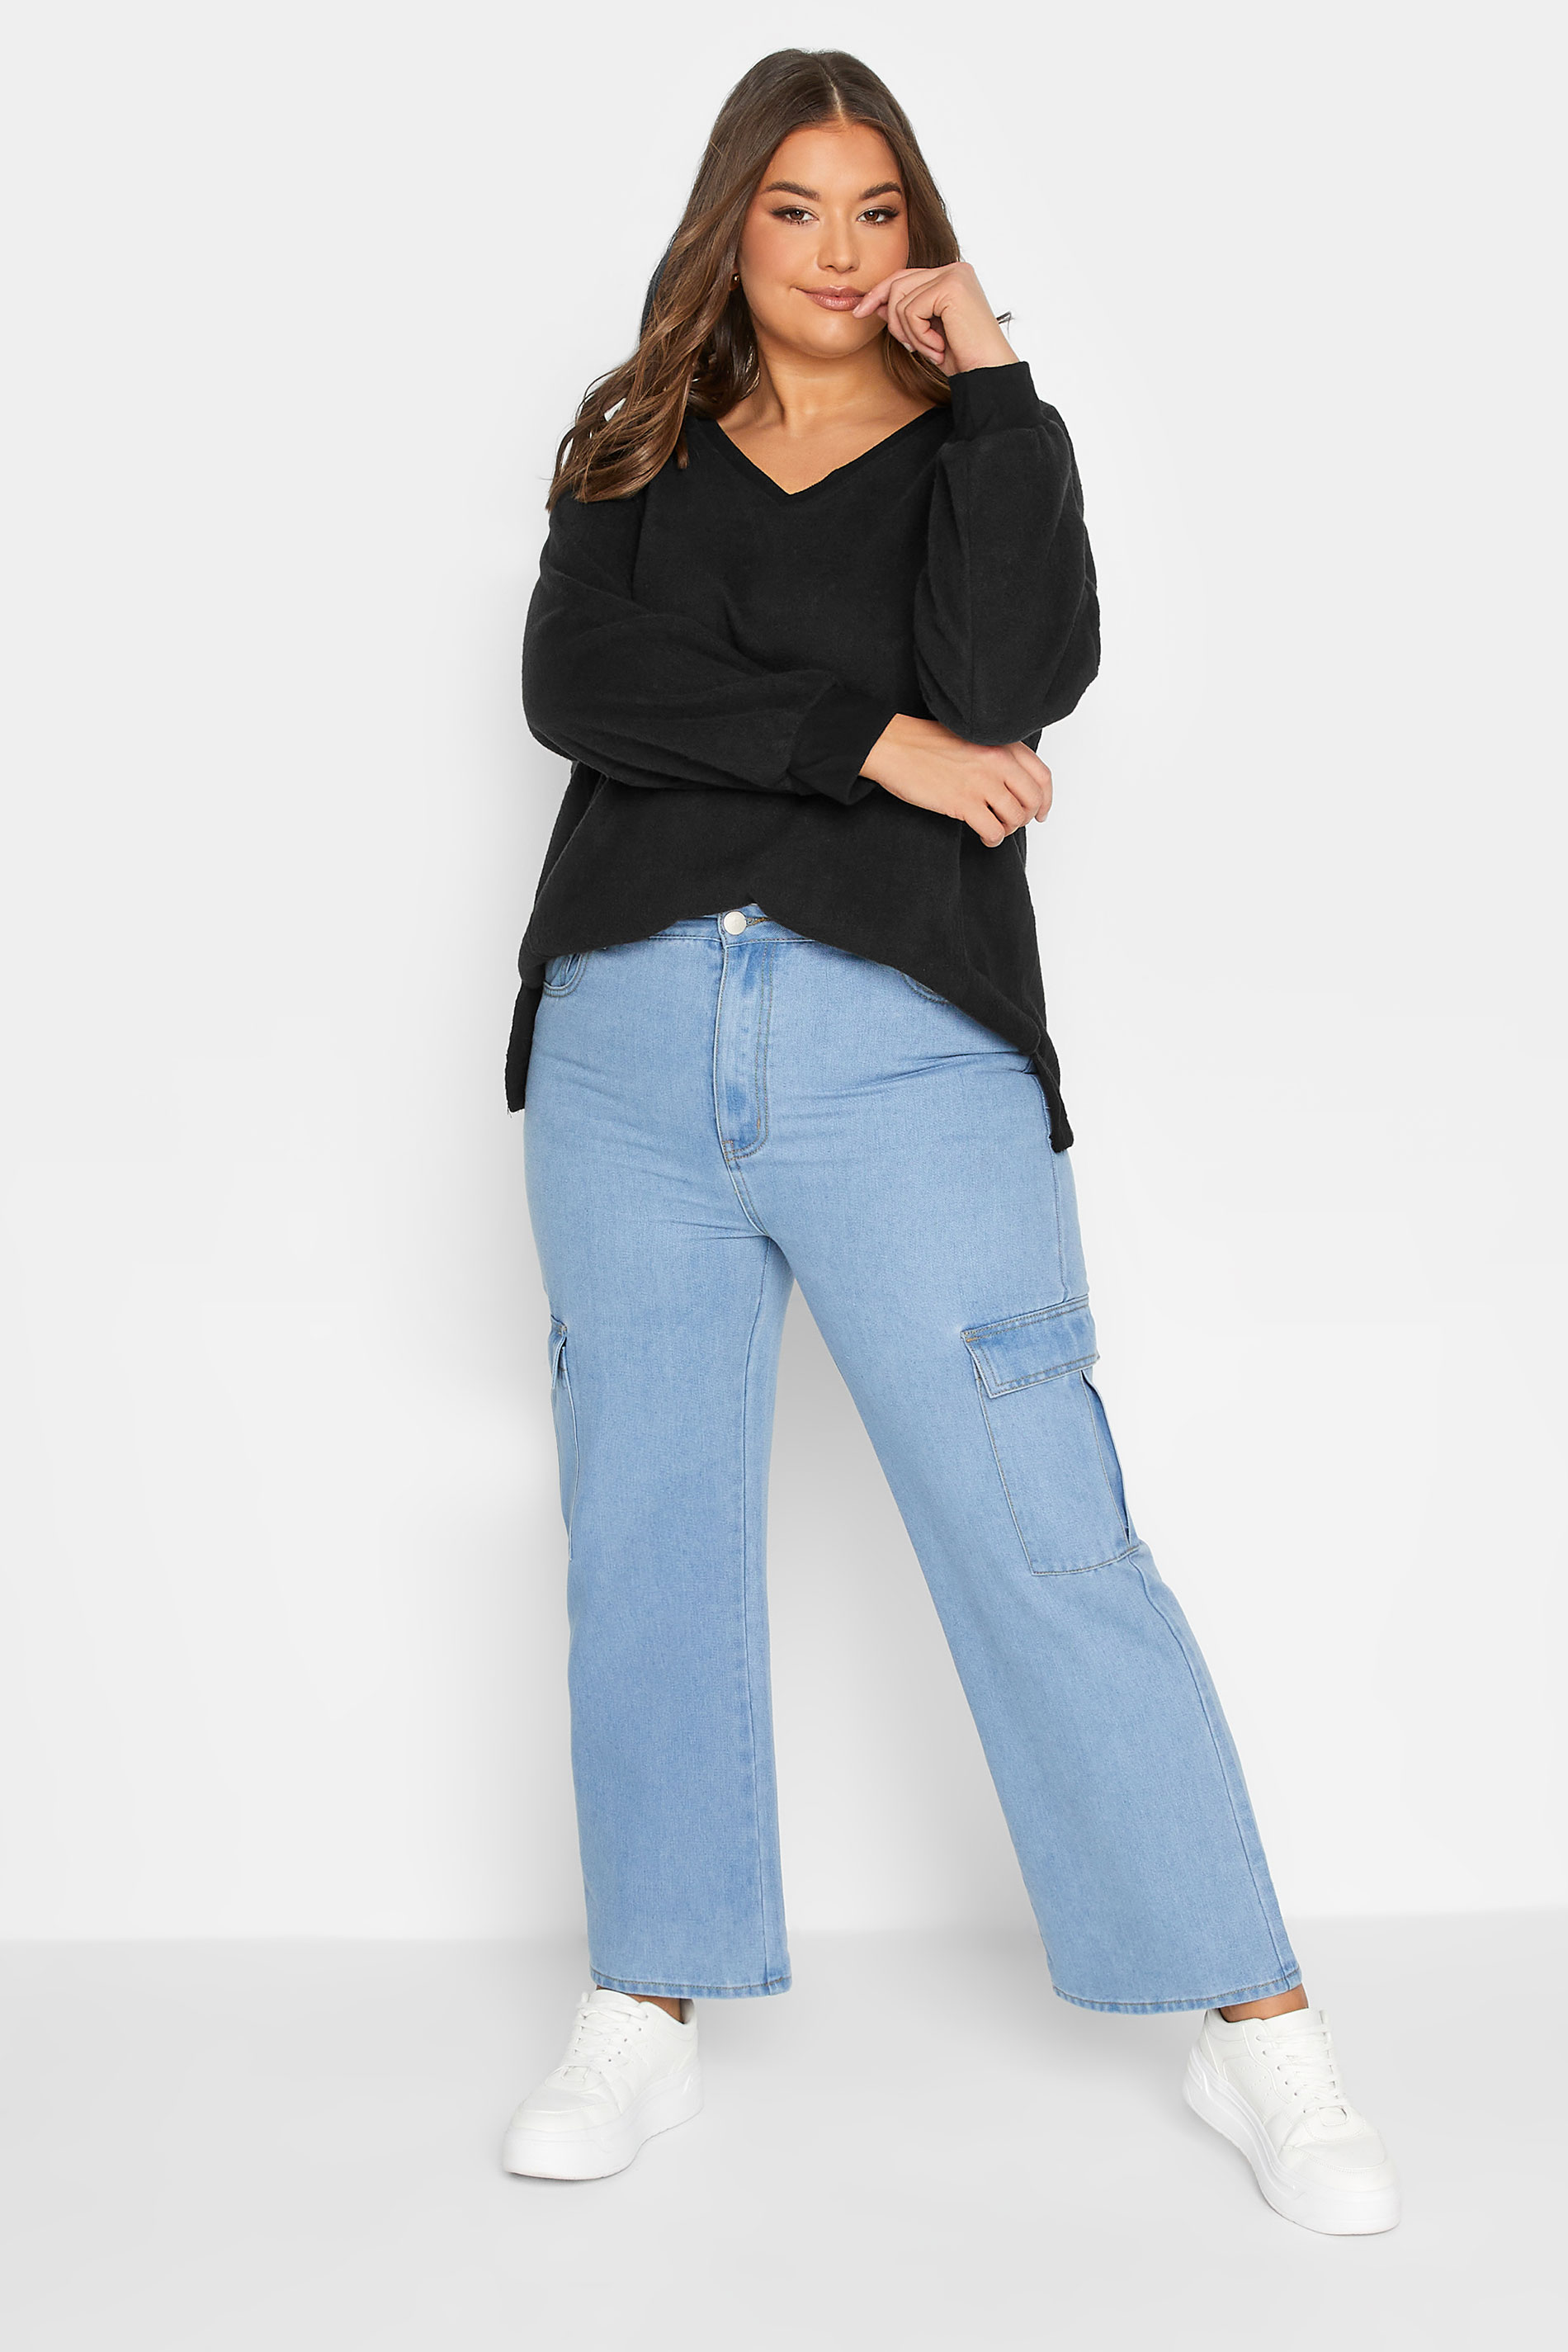 Plus Size Black V-Neck Soft Touch Fleece Sweatshirt | Yours Clothing 2